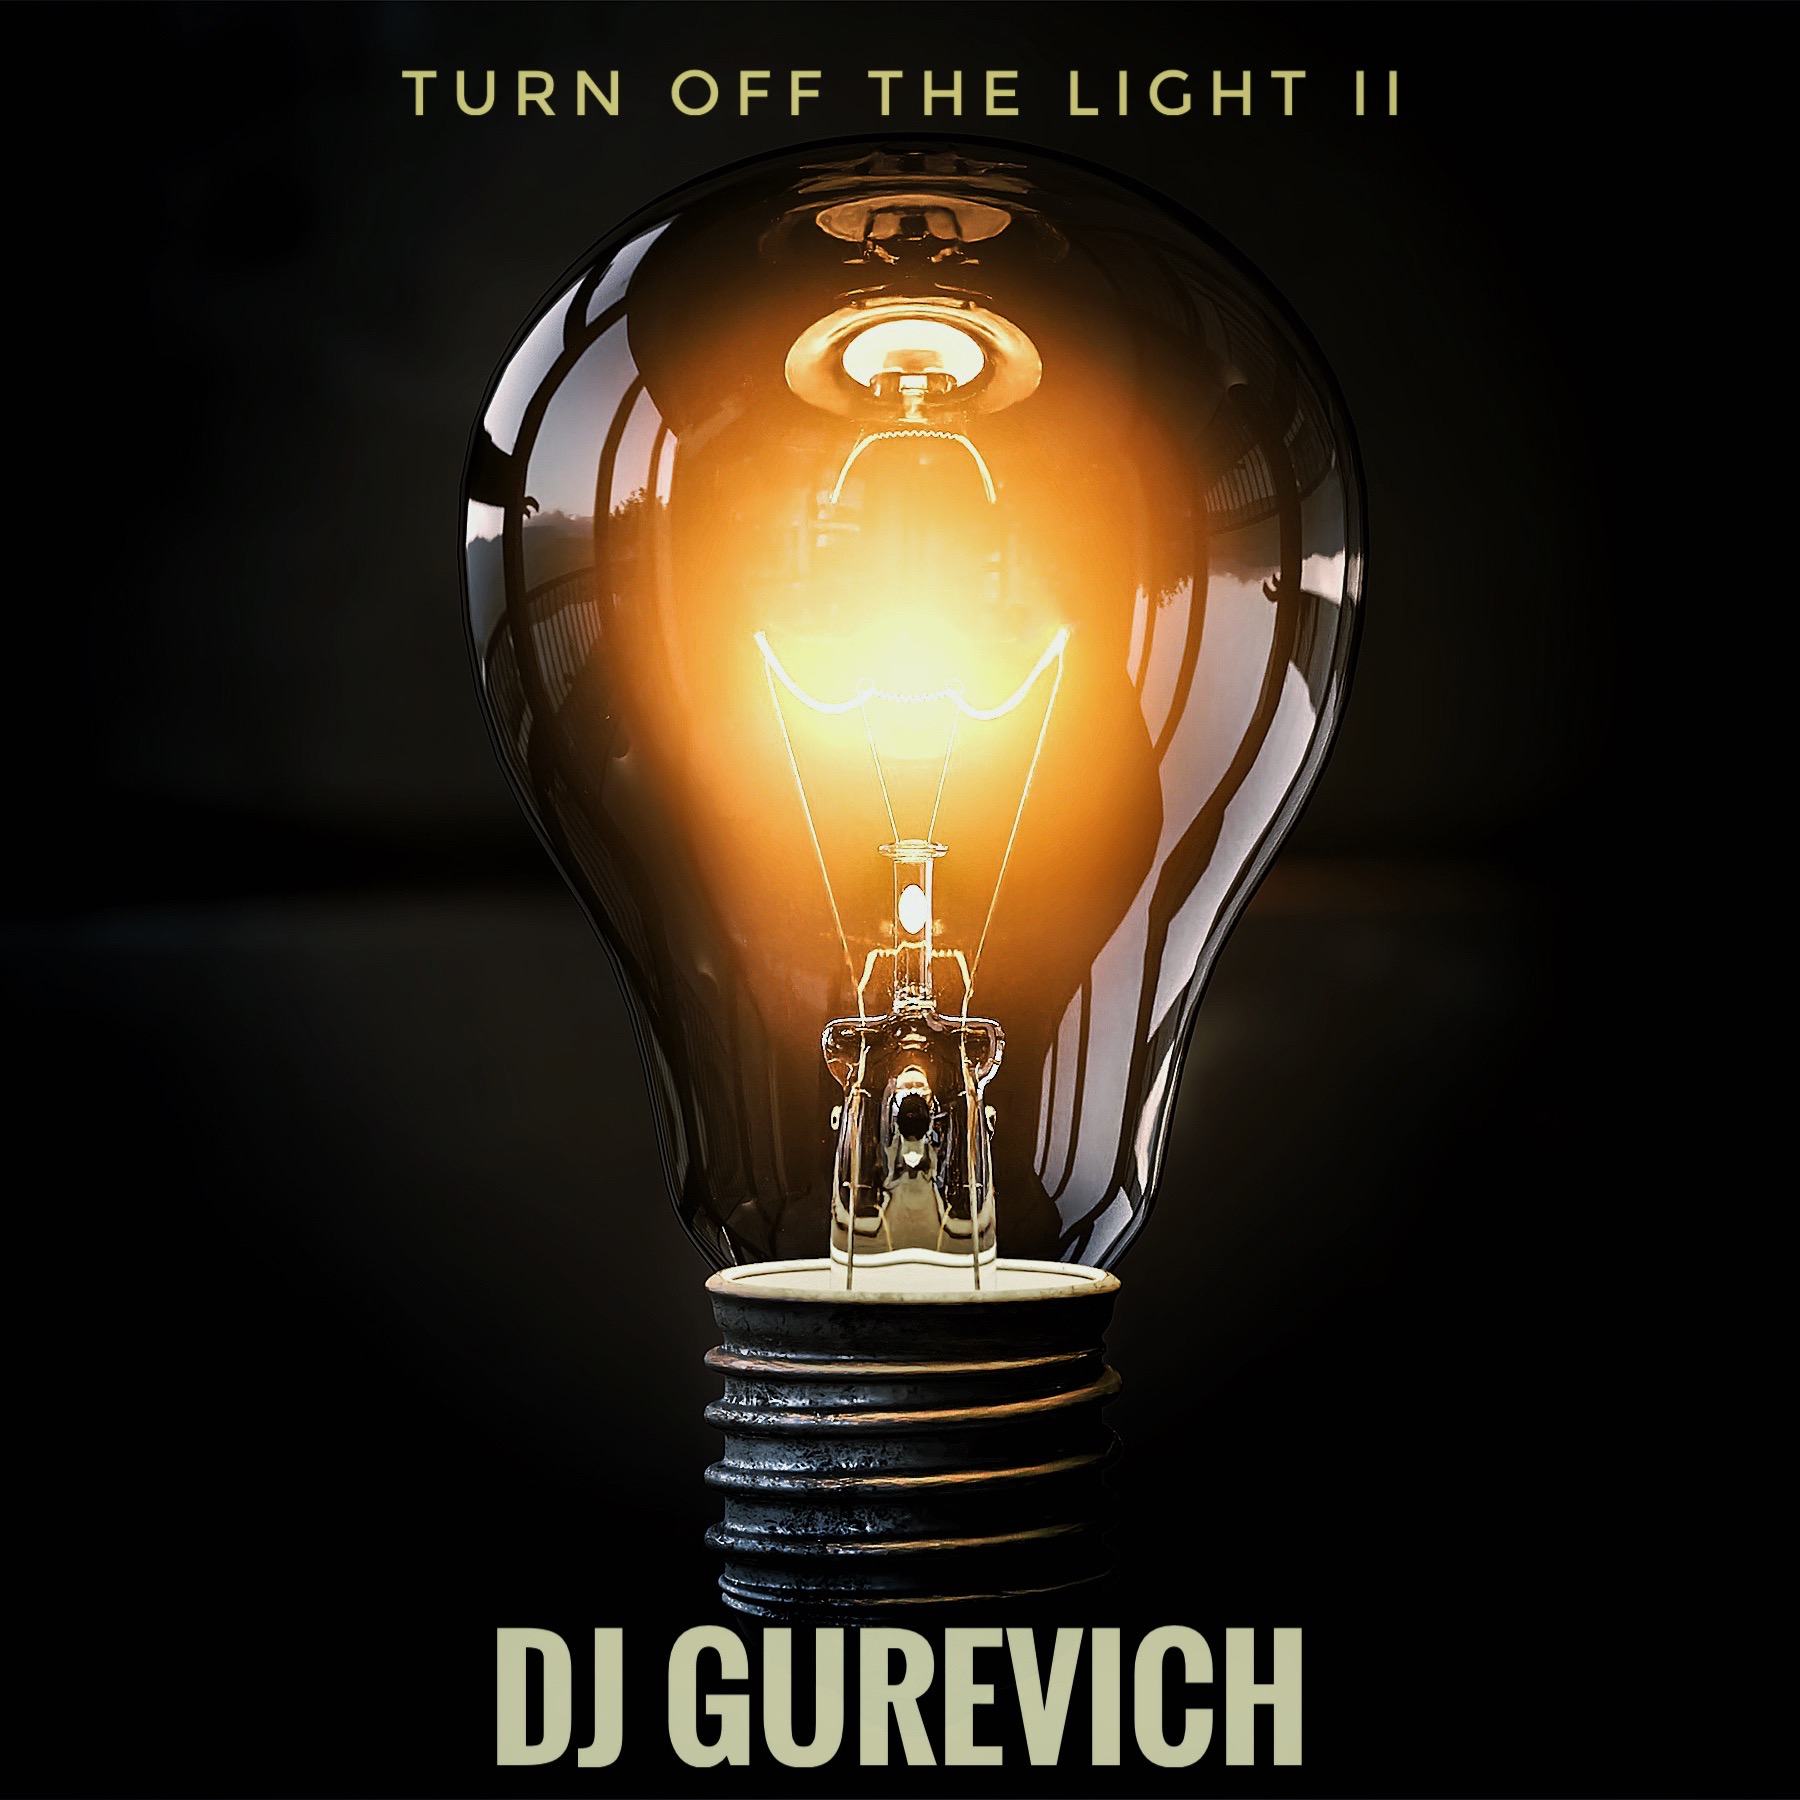 Stiahnuť ▼ Dj Gurevich - Turn off light II